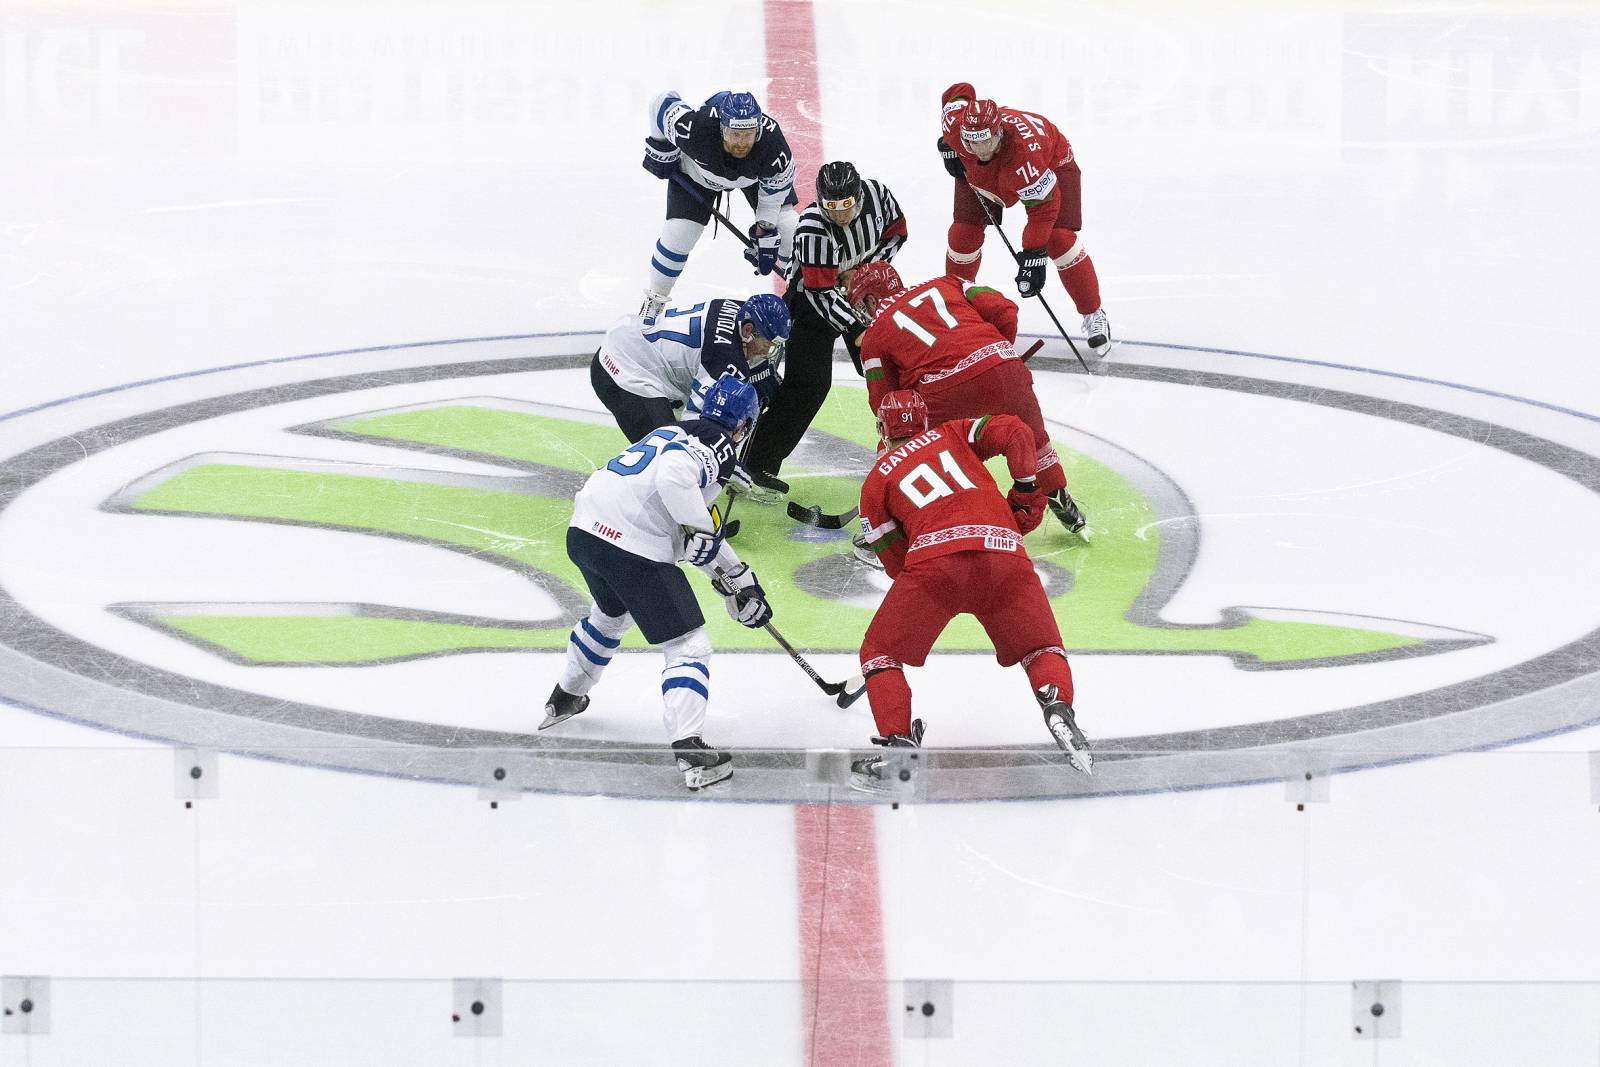 160421 SKODA-IIHF-sponsoring-01